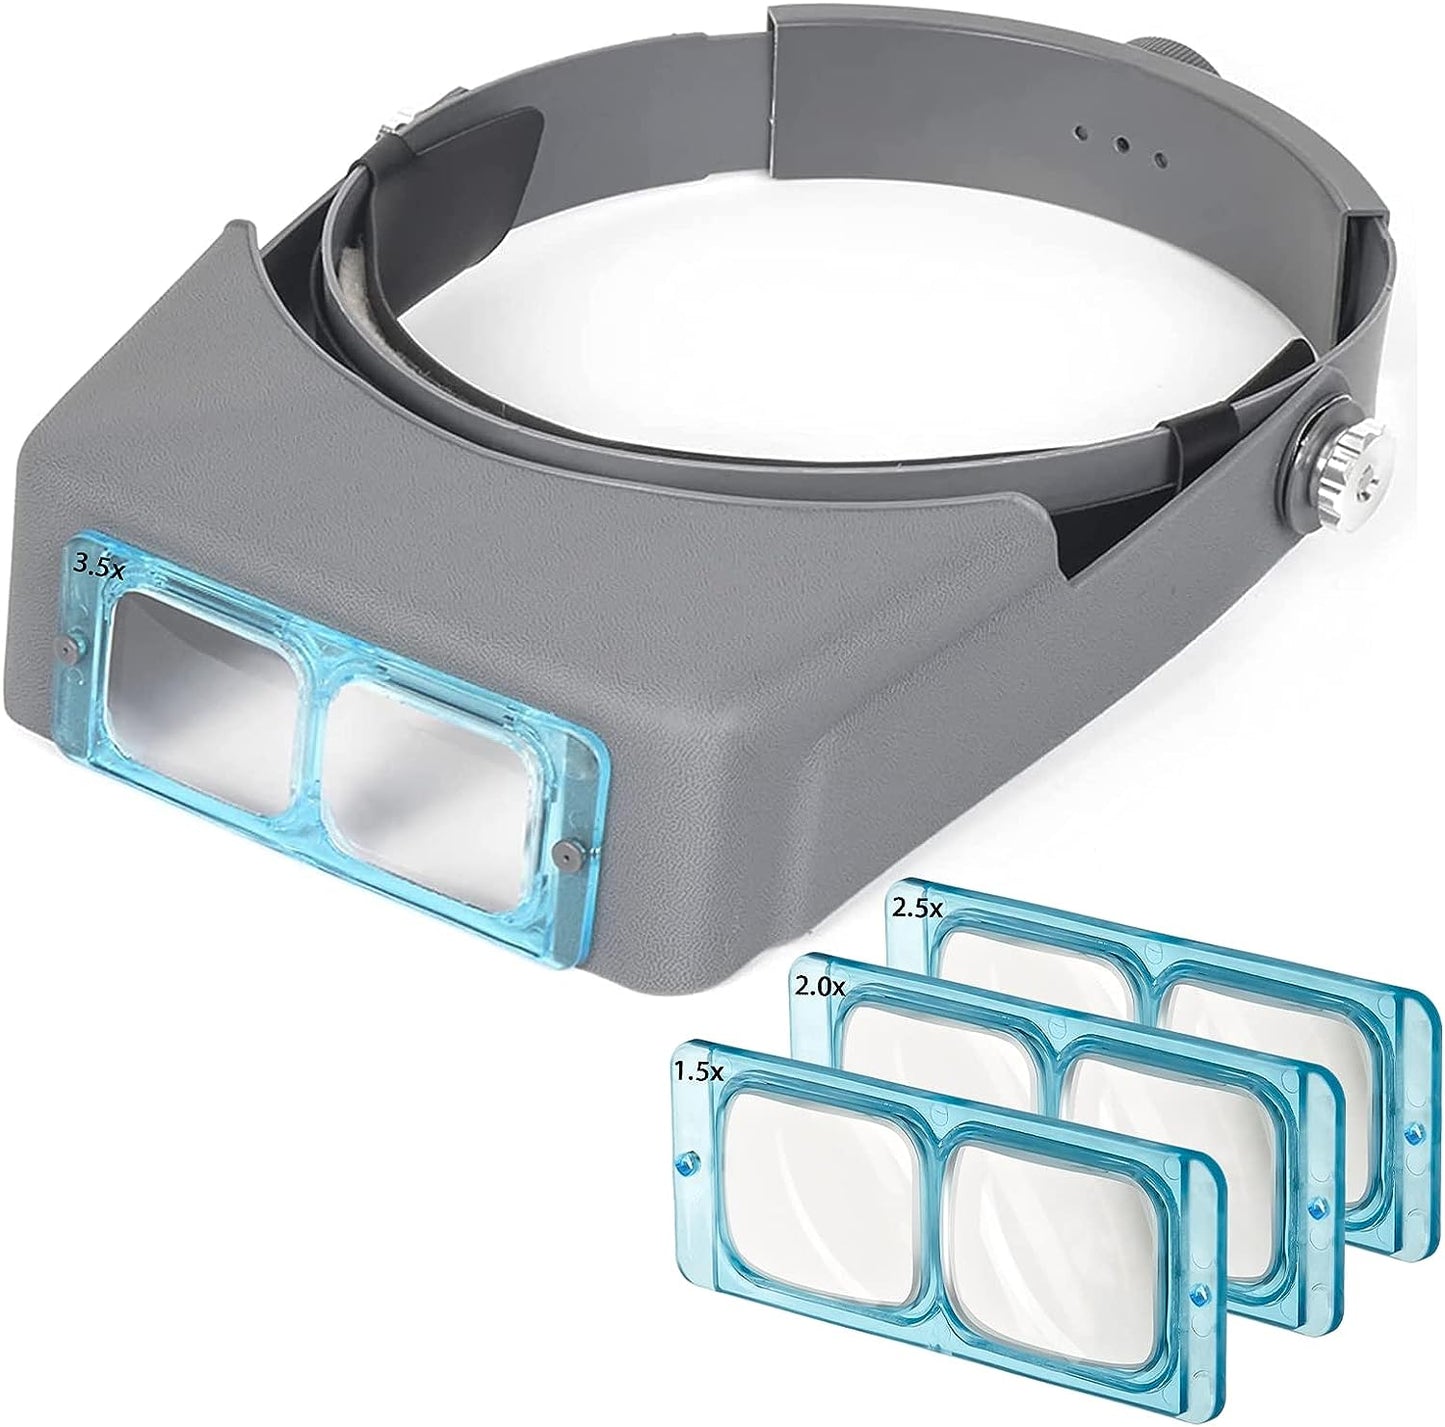 SUNJOYCO Head Mount Magnifier, Professional Jeweler Loupe Headband Magnifying Glass